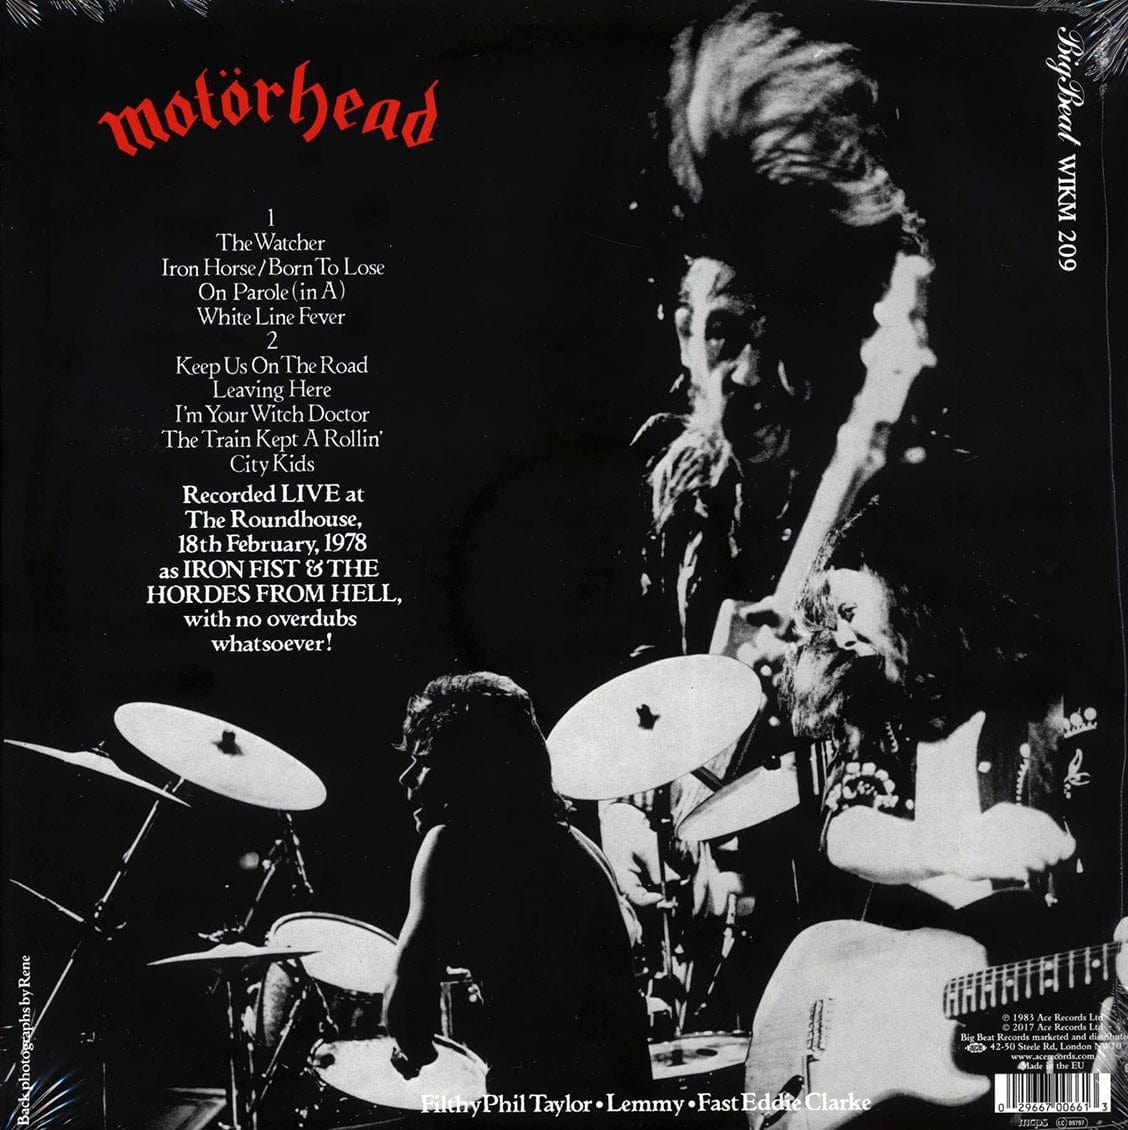 MOTORHEAD: What's Words Worth? Recorded Live 1978 LP (color vinyl)